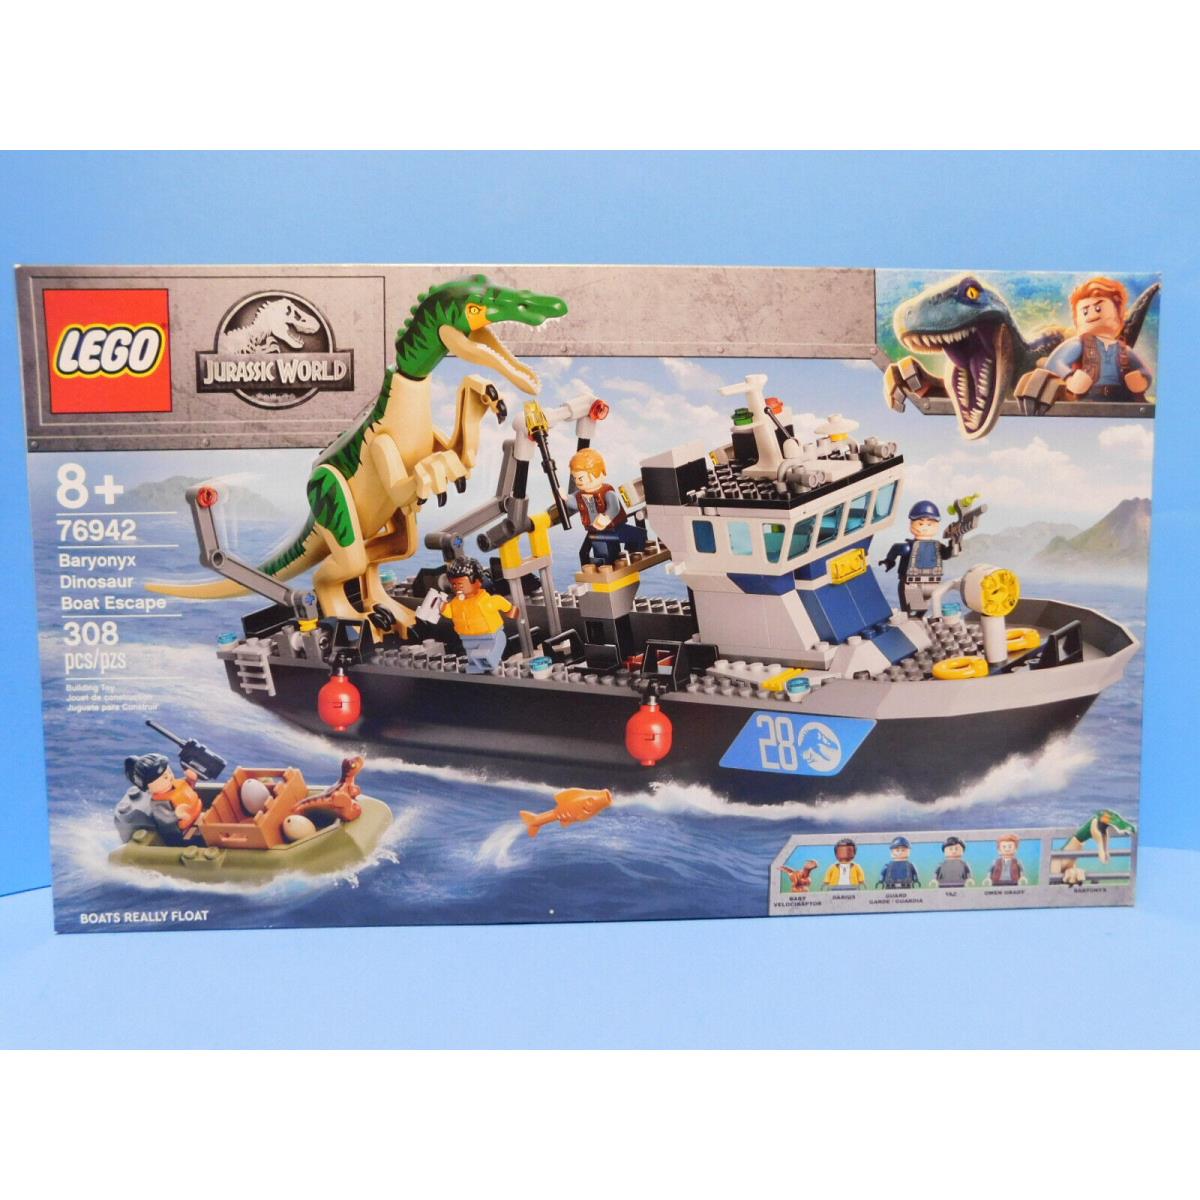 Lego Jurassic World 76942 Baryonyx Dinosaur Boat Escape